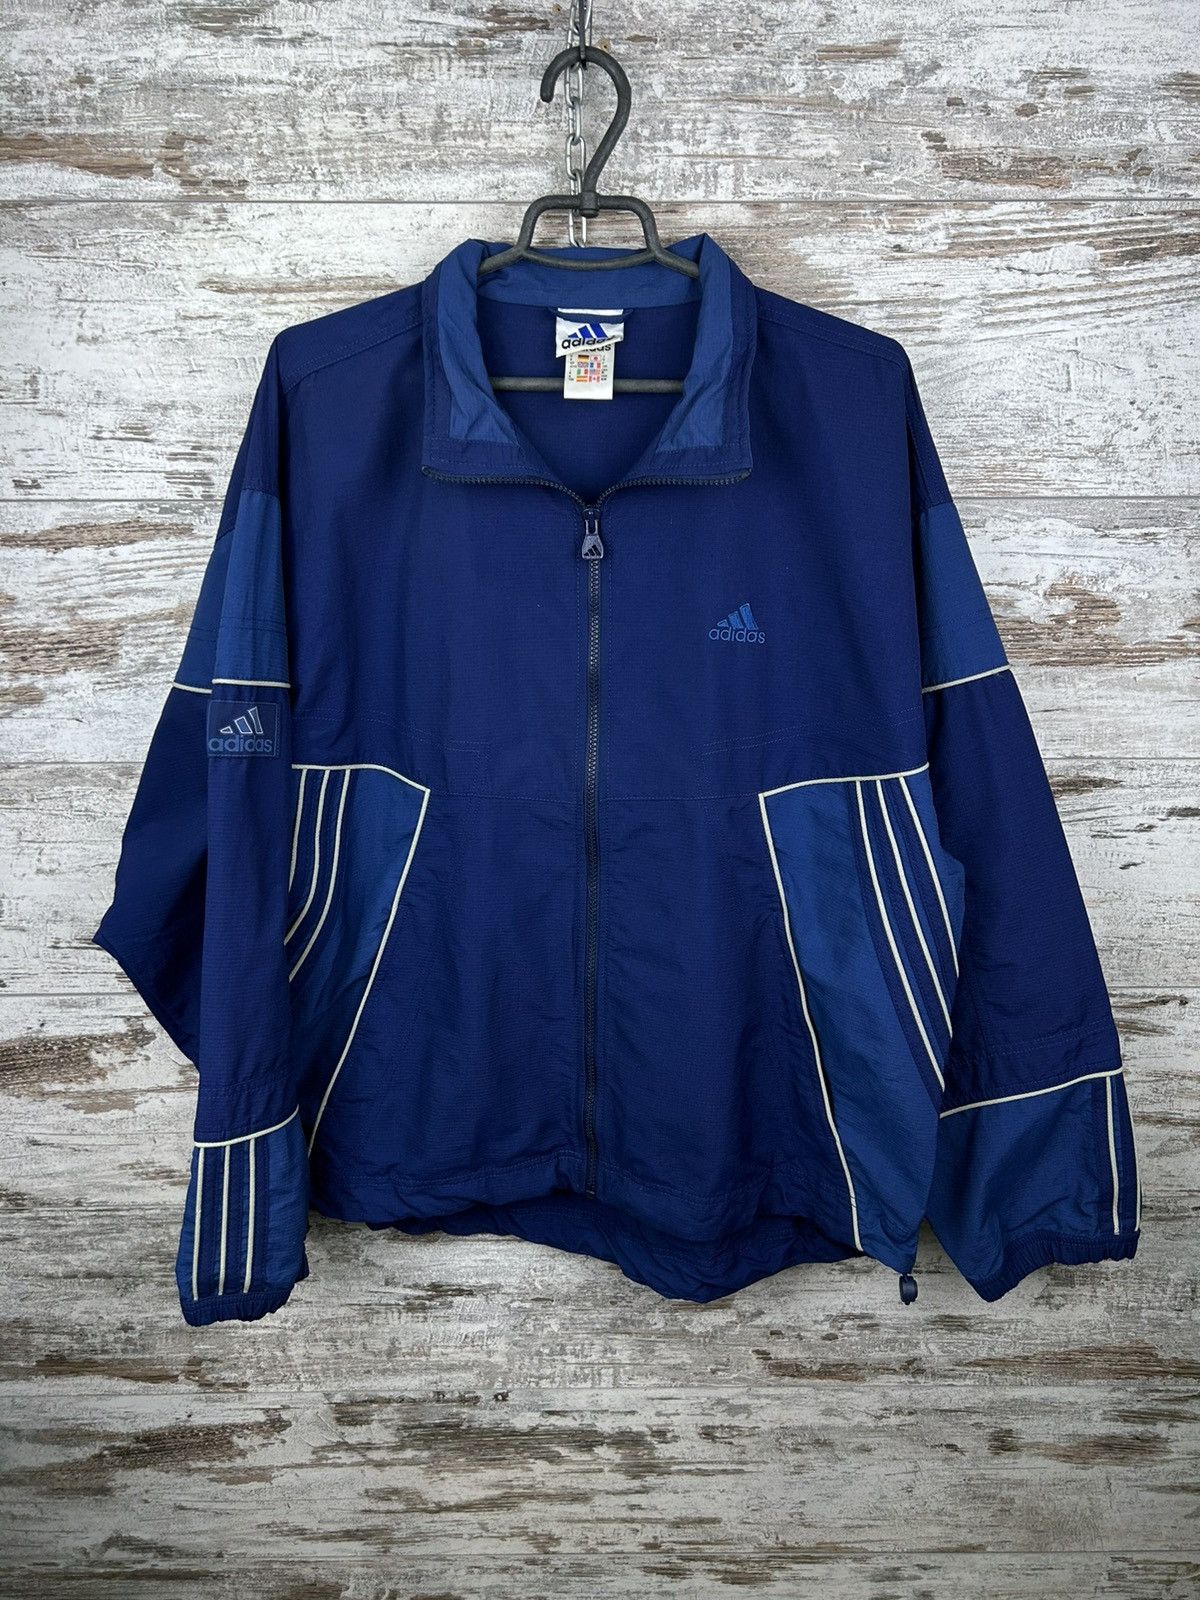 Adidas Mens Vintage Adidas Stripes Olympic track jacket y2k rare Size US M / EU 48-50 / 2 - 3 Thumbnail